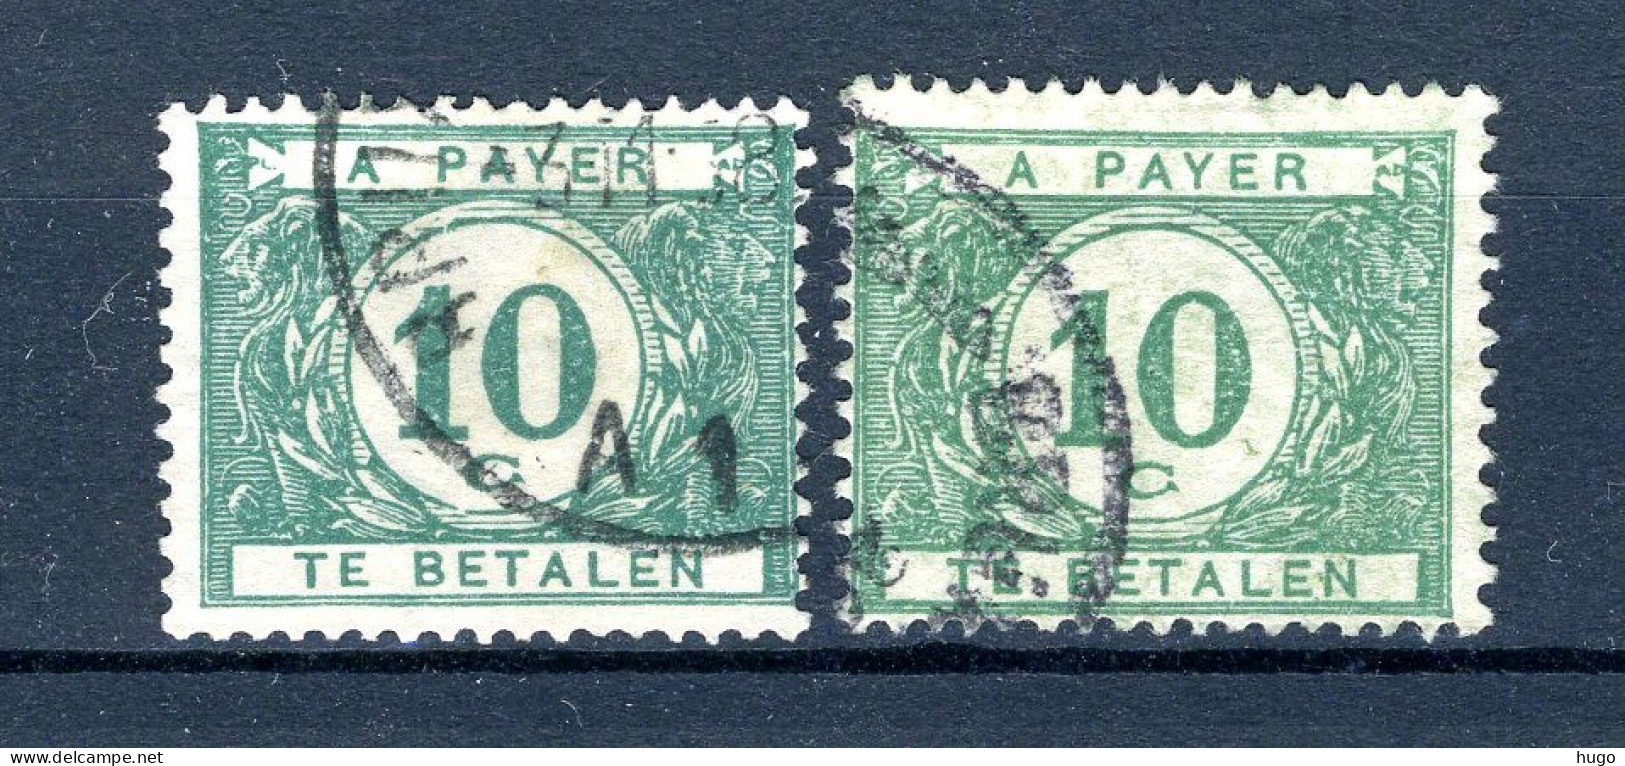 (B) TX33 Gestempeld 1922 - Dik Gekleurd Cijfer Op Witte Achtergrond (2 St.) - Stamps